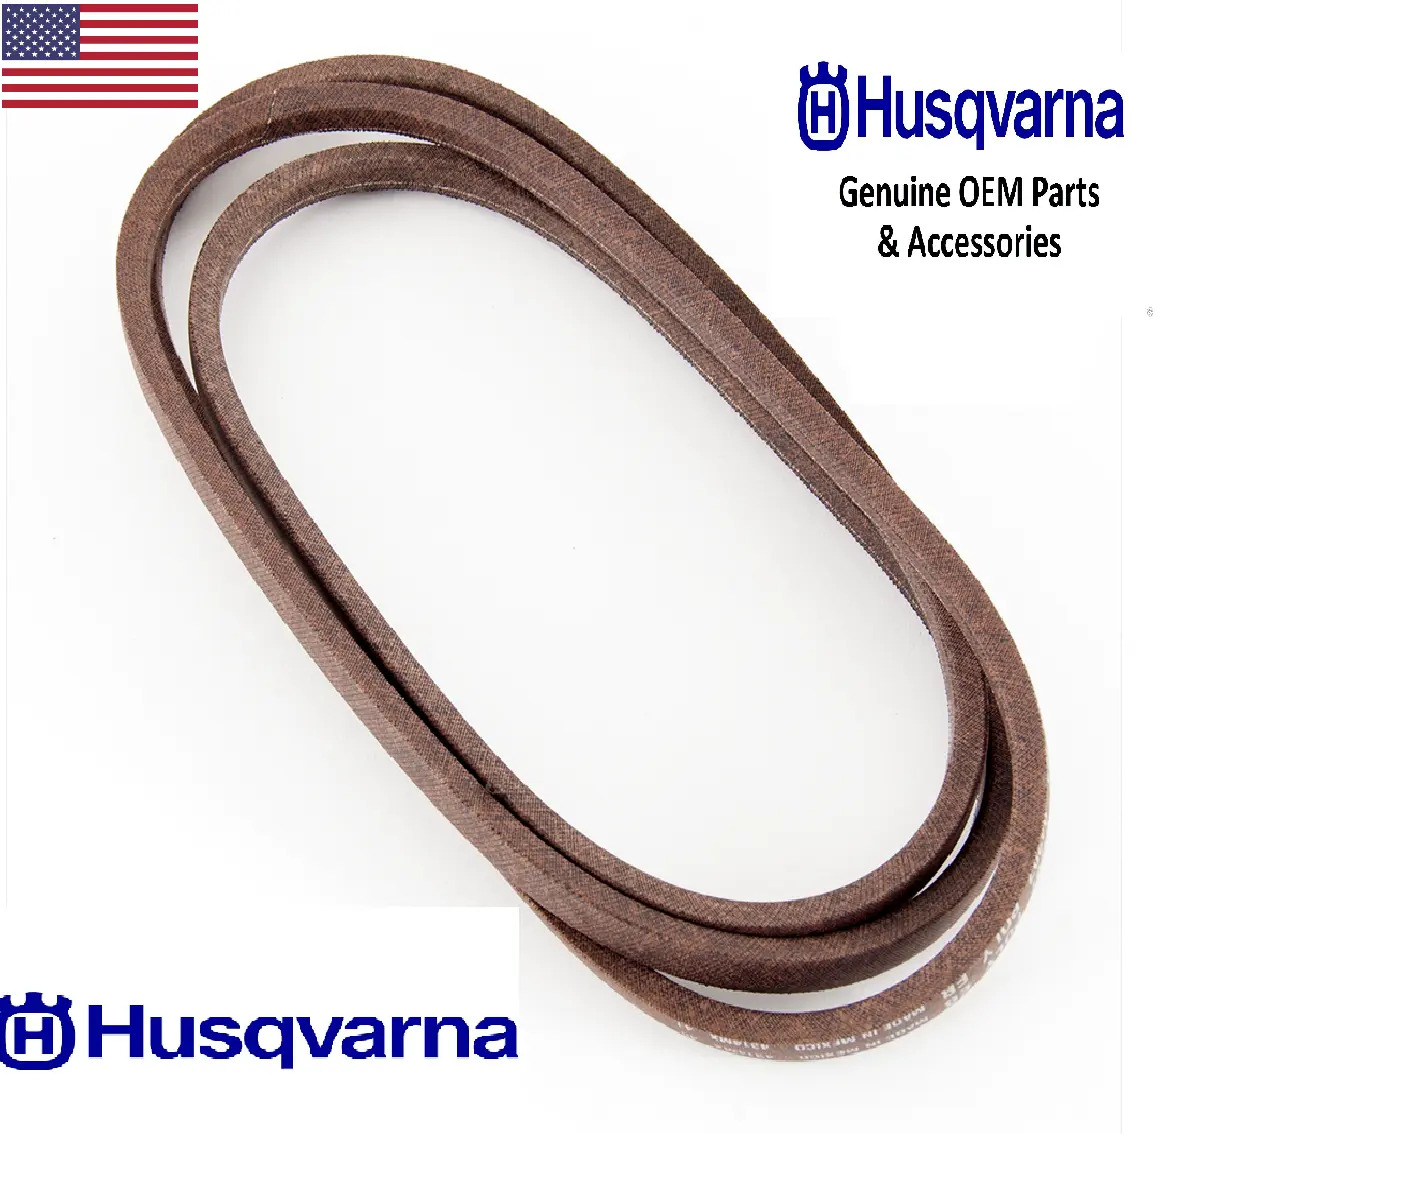 Genuine OEM Husqvarna Deck Belt 522795901 / 539104335 for MZT61 MZ61